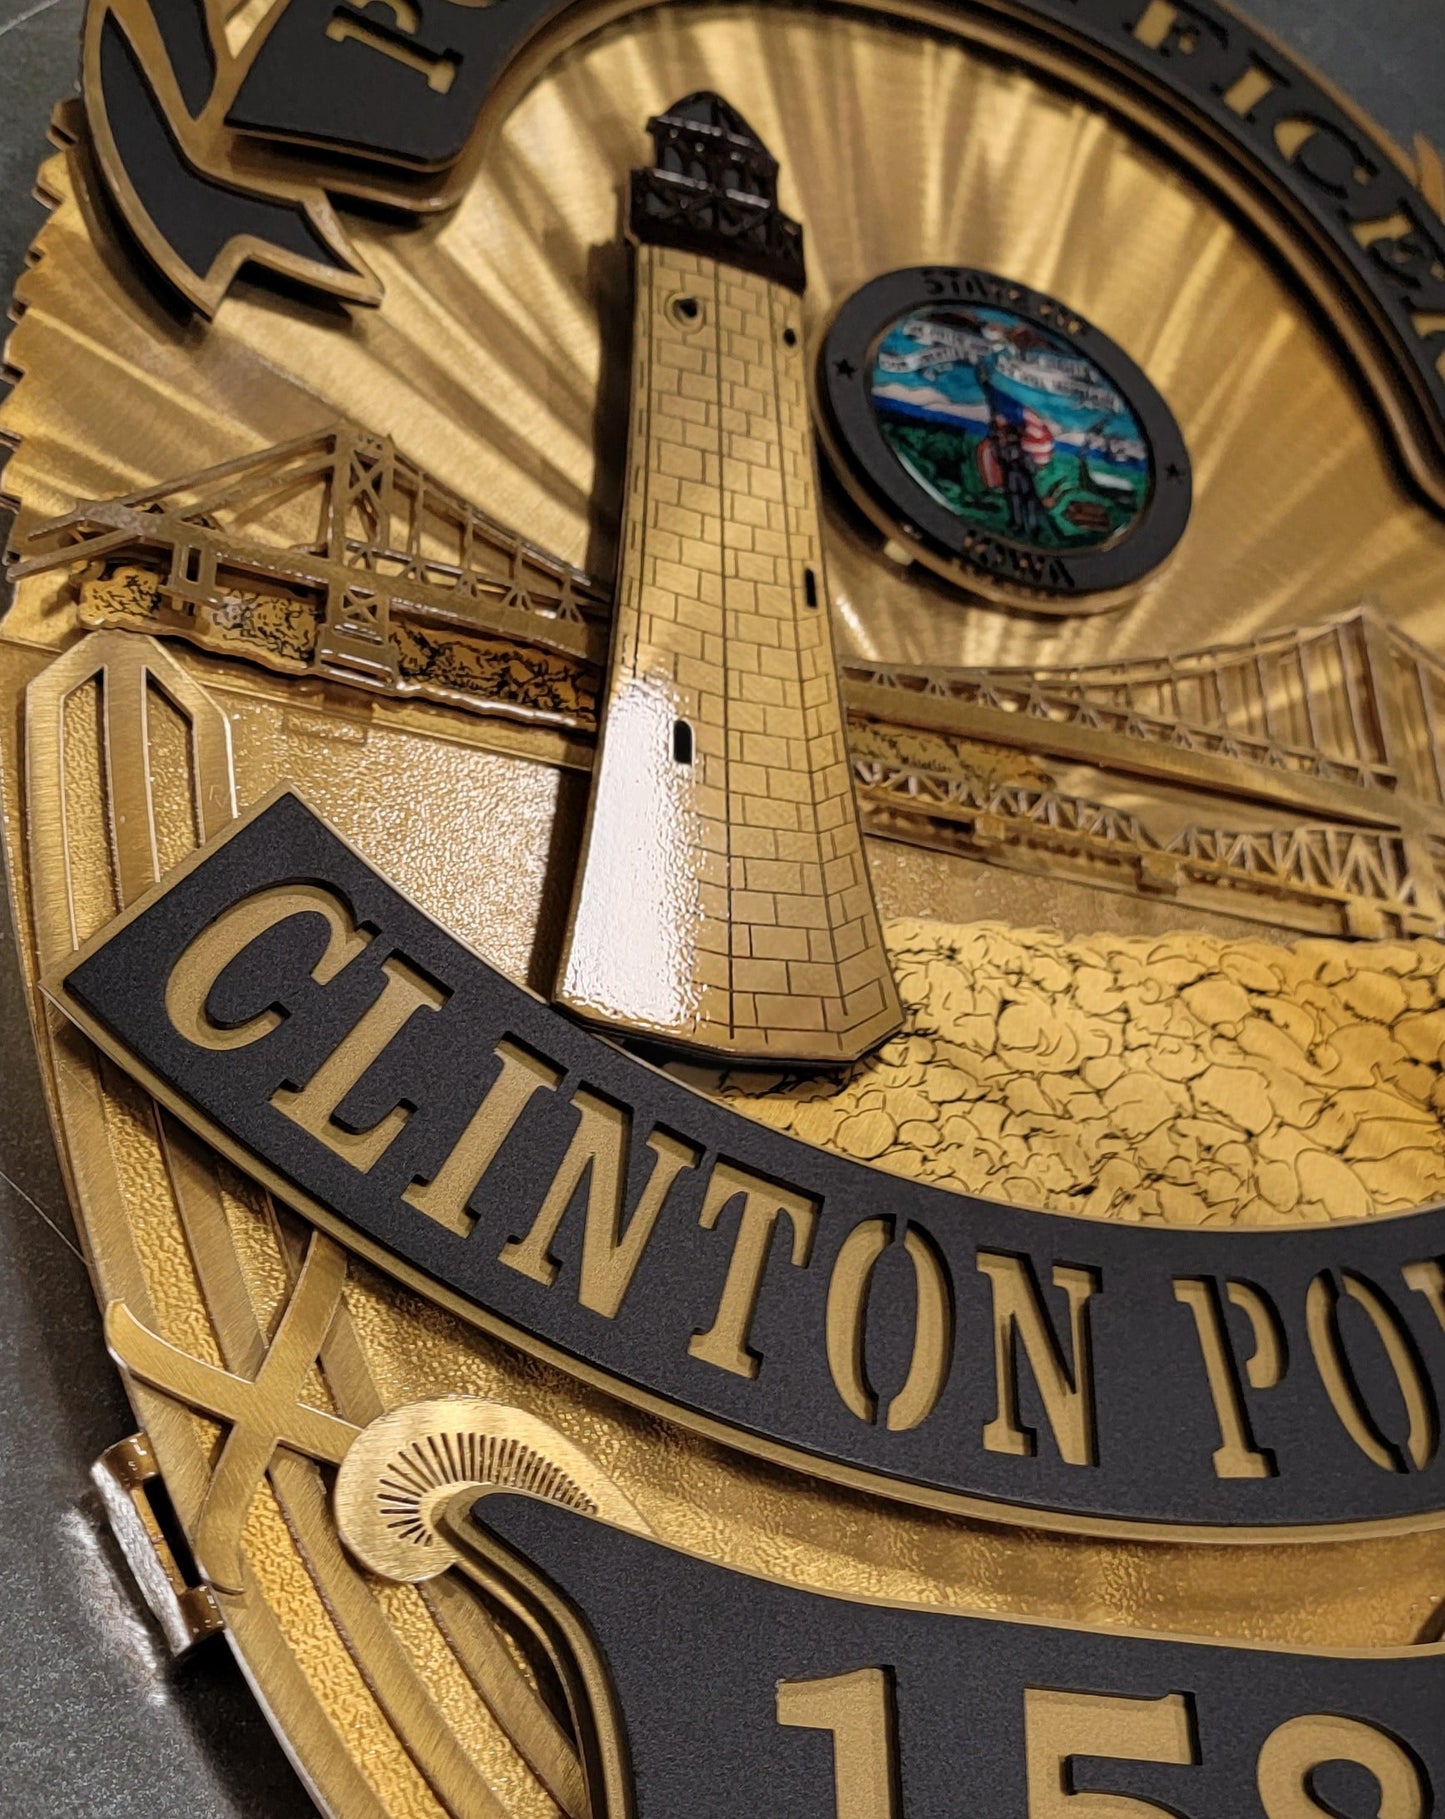 Clinton Police Department Badge